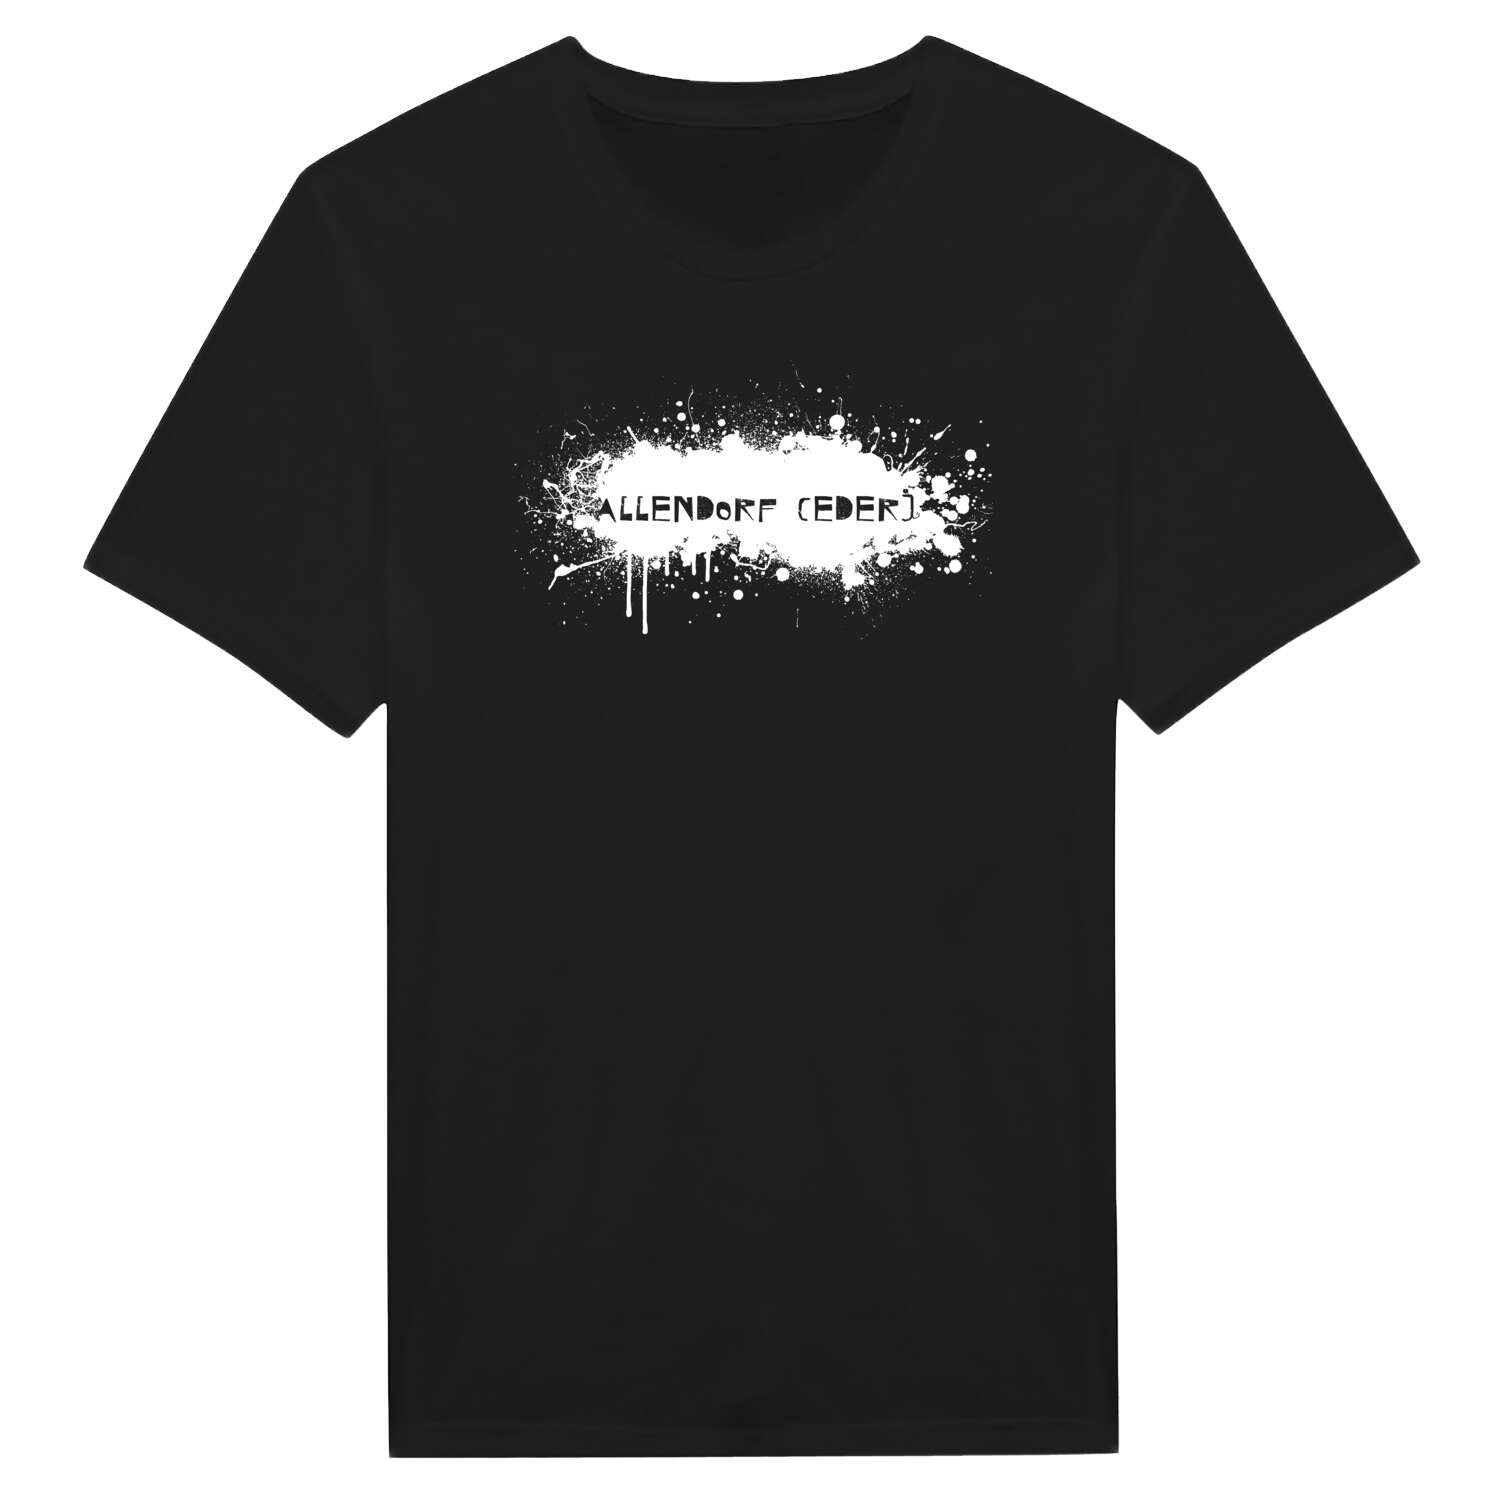 Allendorf (Eder) T-Shirt »Paint Splash Punk«